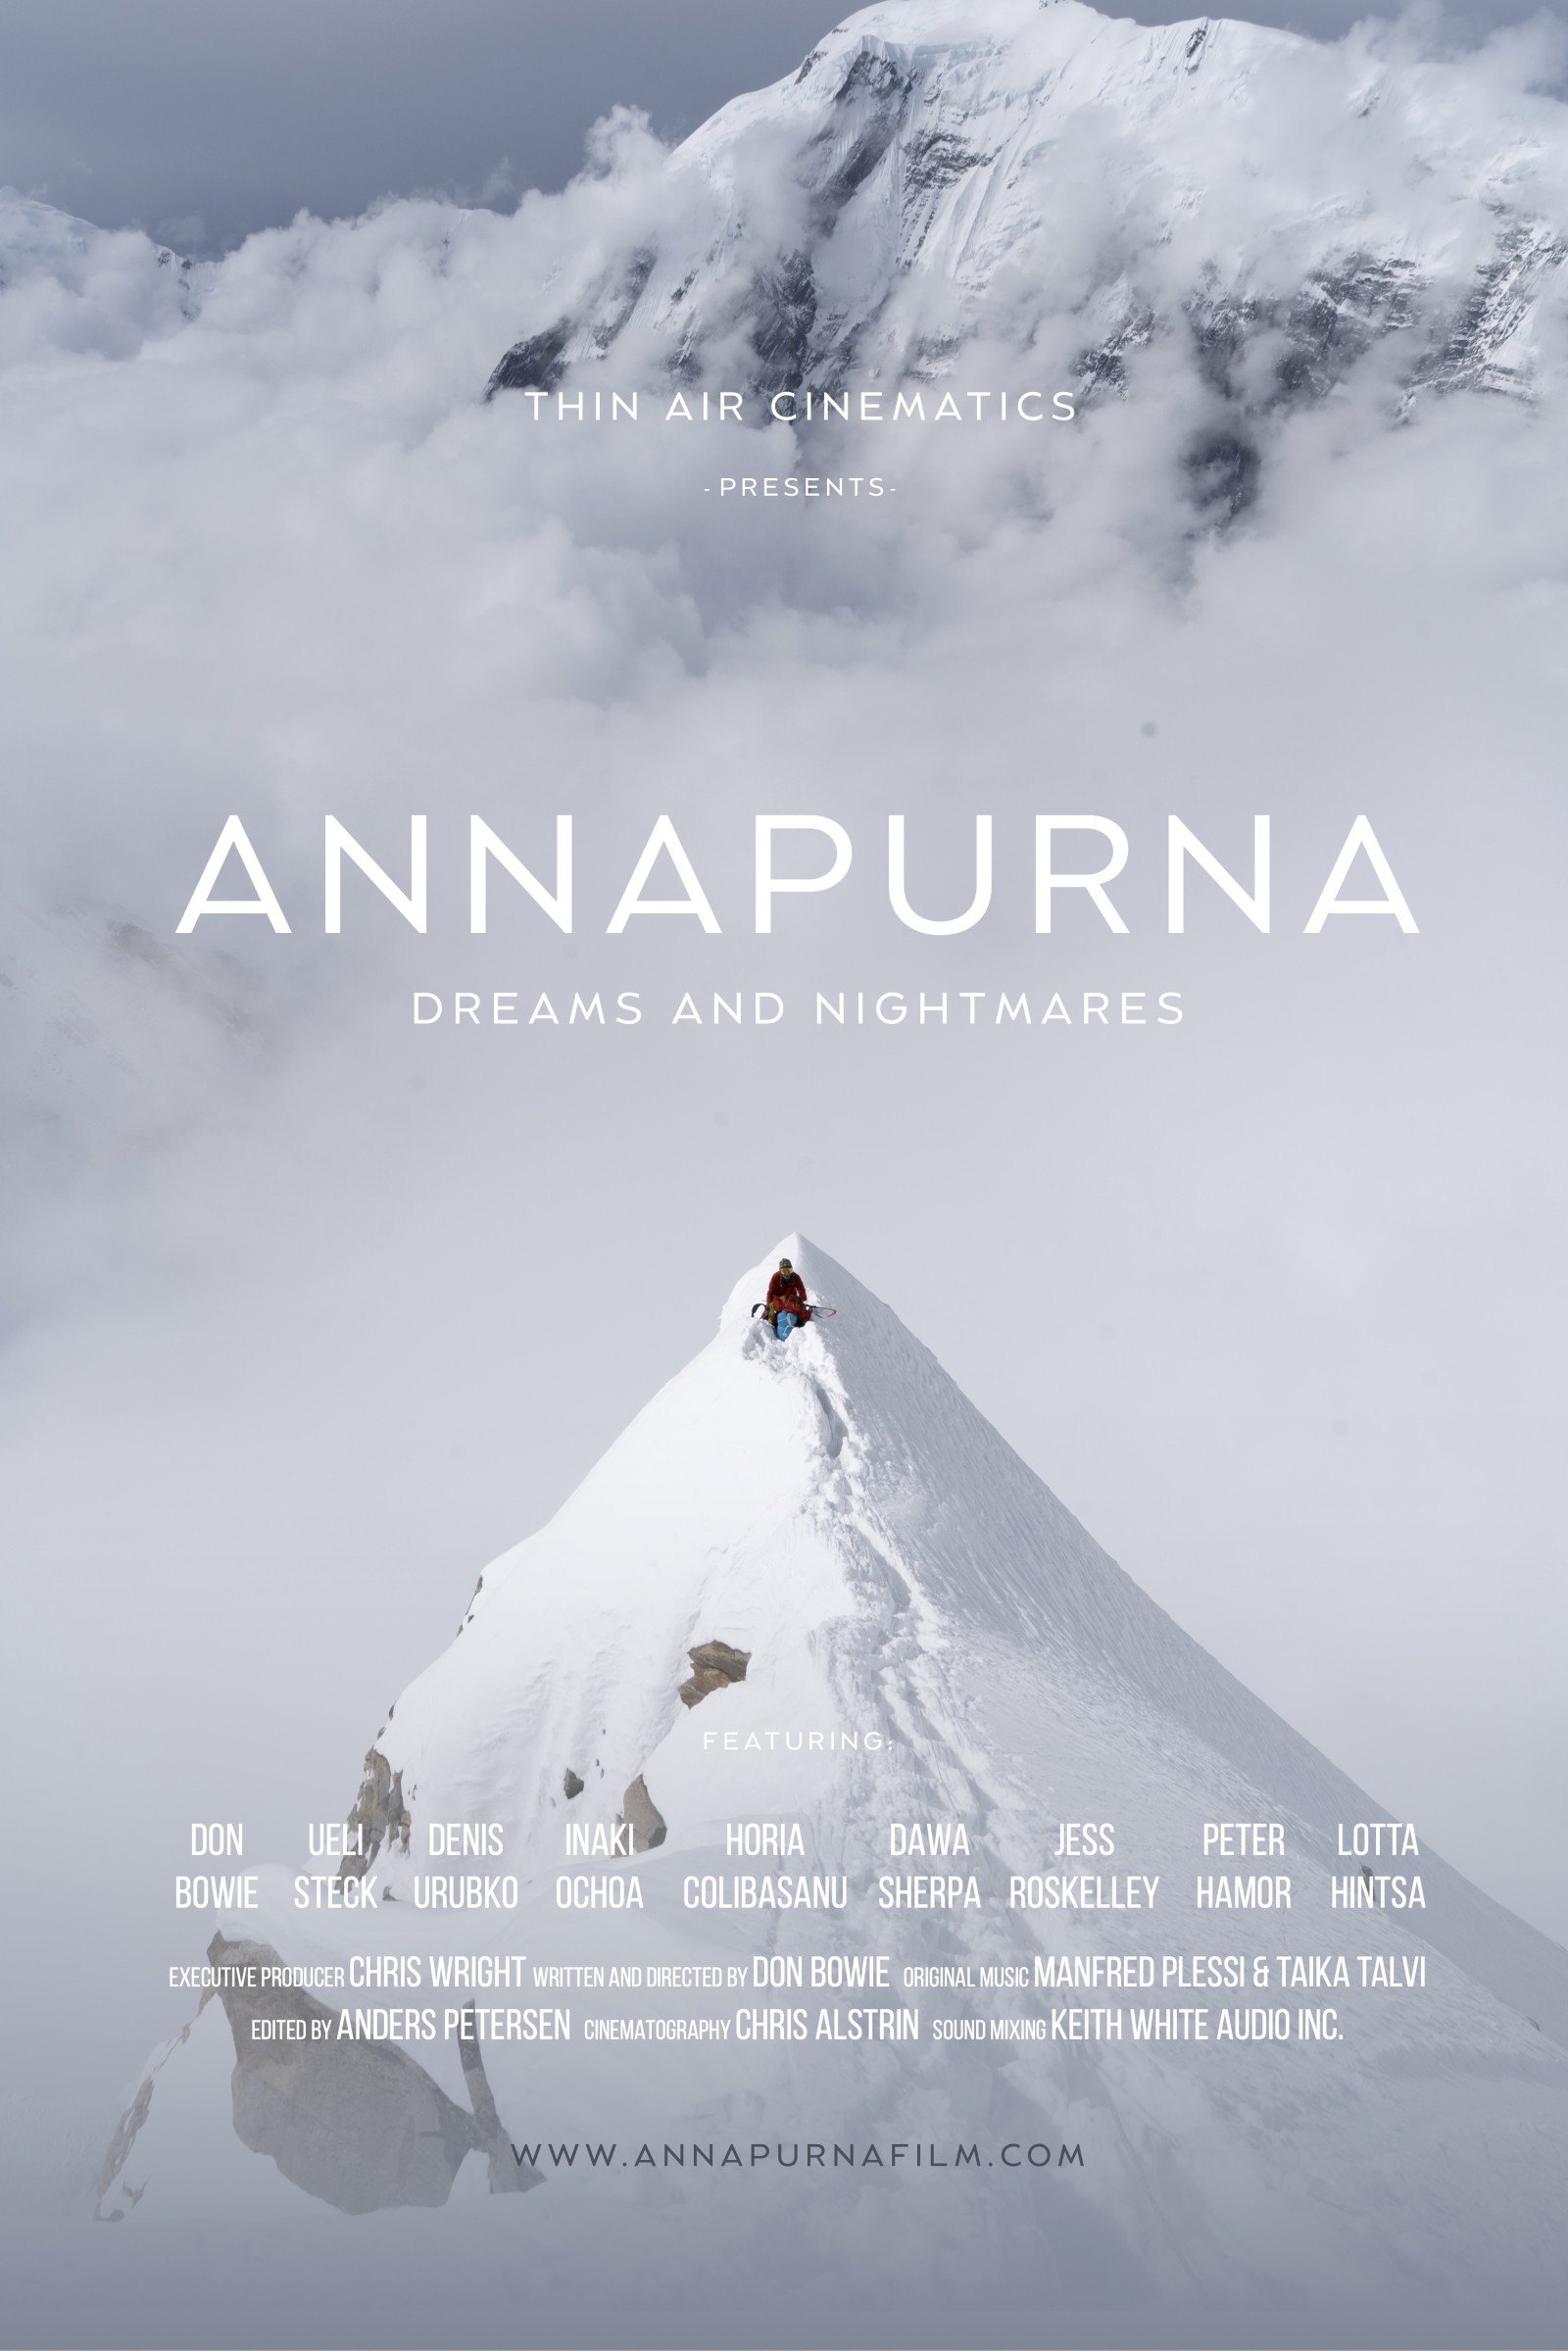 Annapurna Dreams and Nightmares